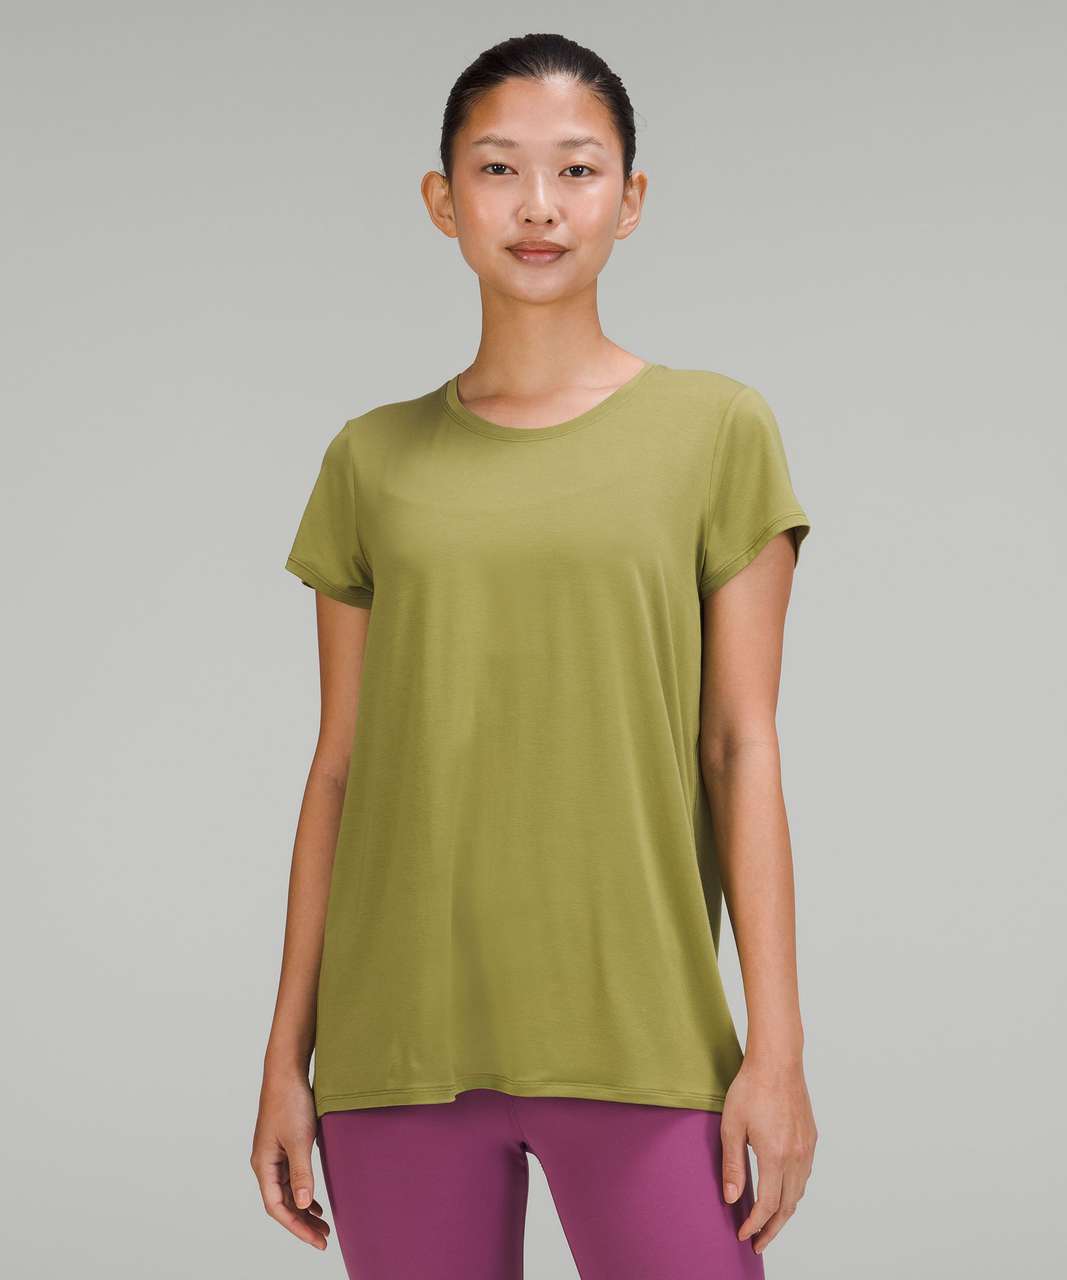 Lululemon Modal Open Up Tie Back T-Shirt - Bronze Green